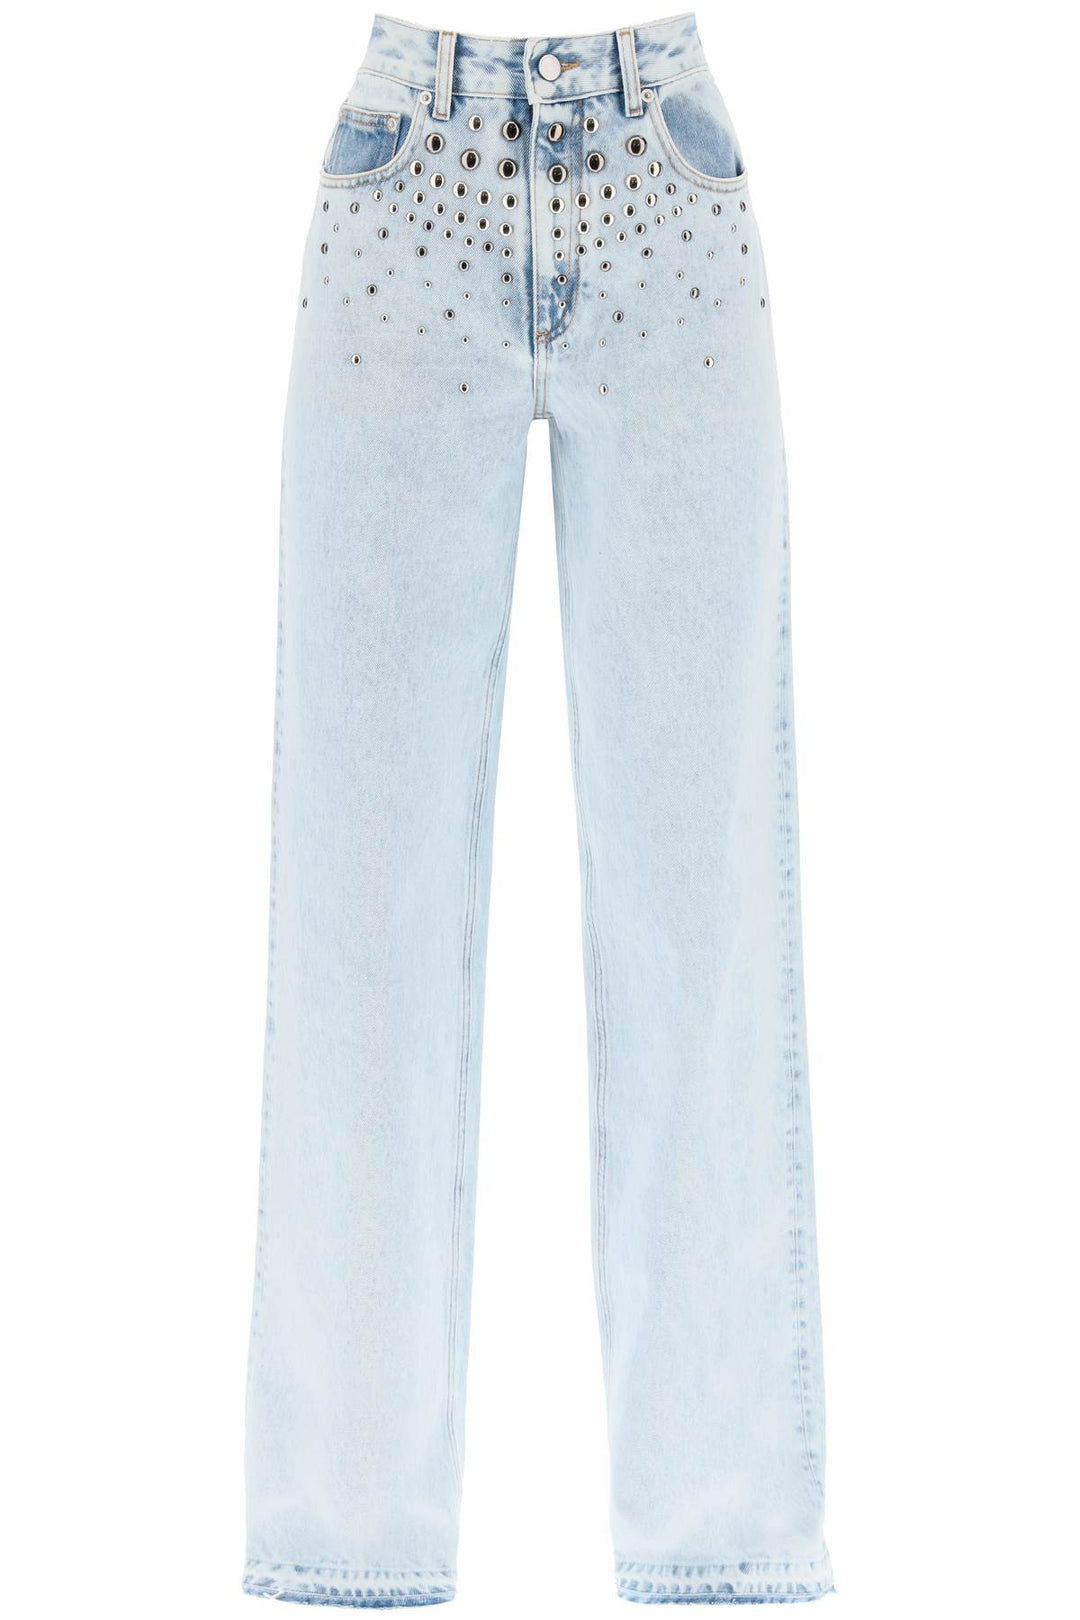 Alessandra Rich Jeans With Studs   Celeste